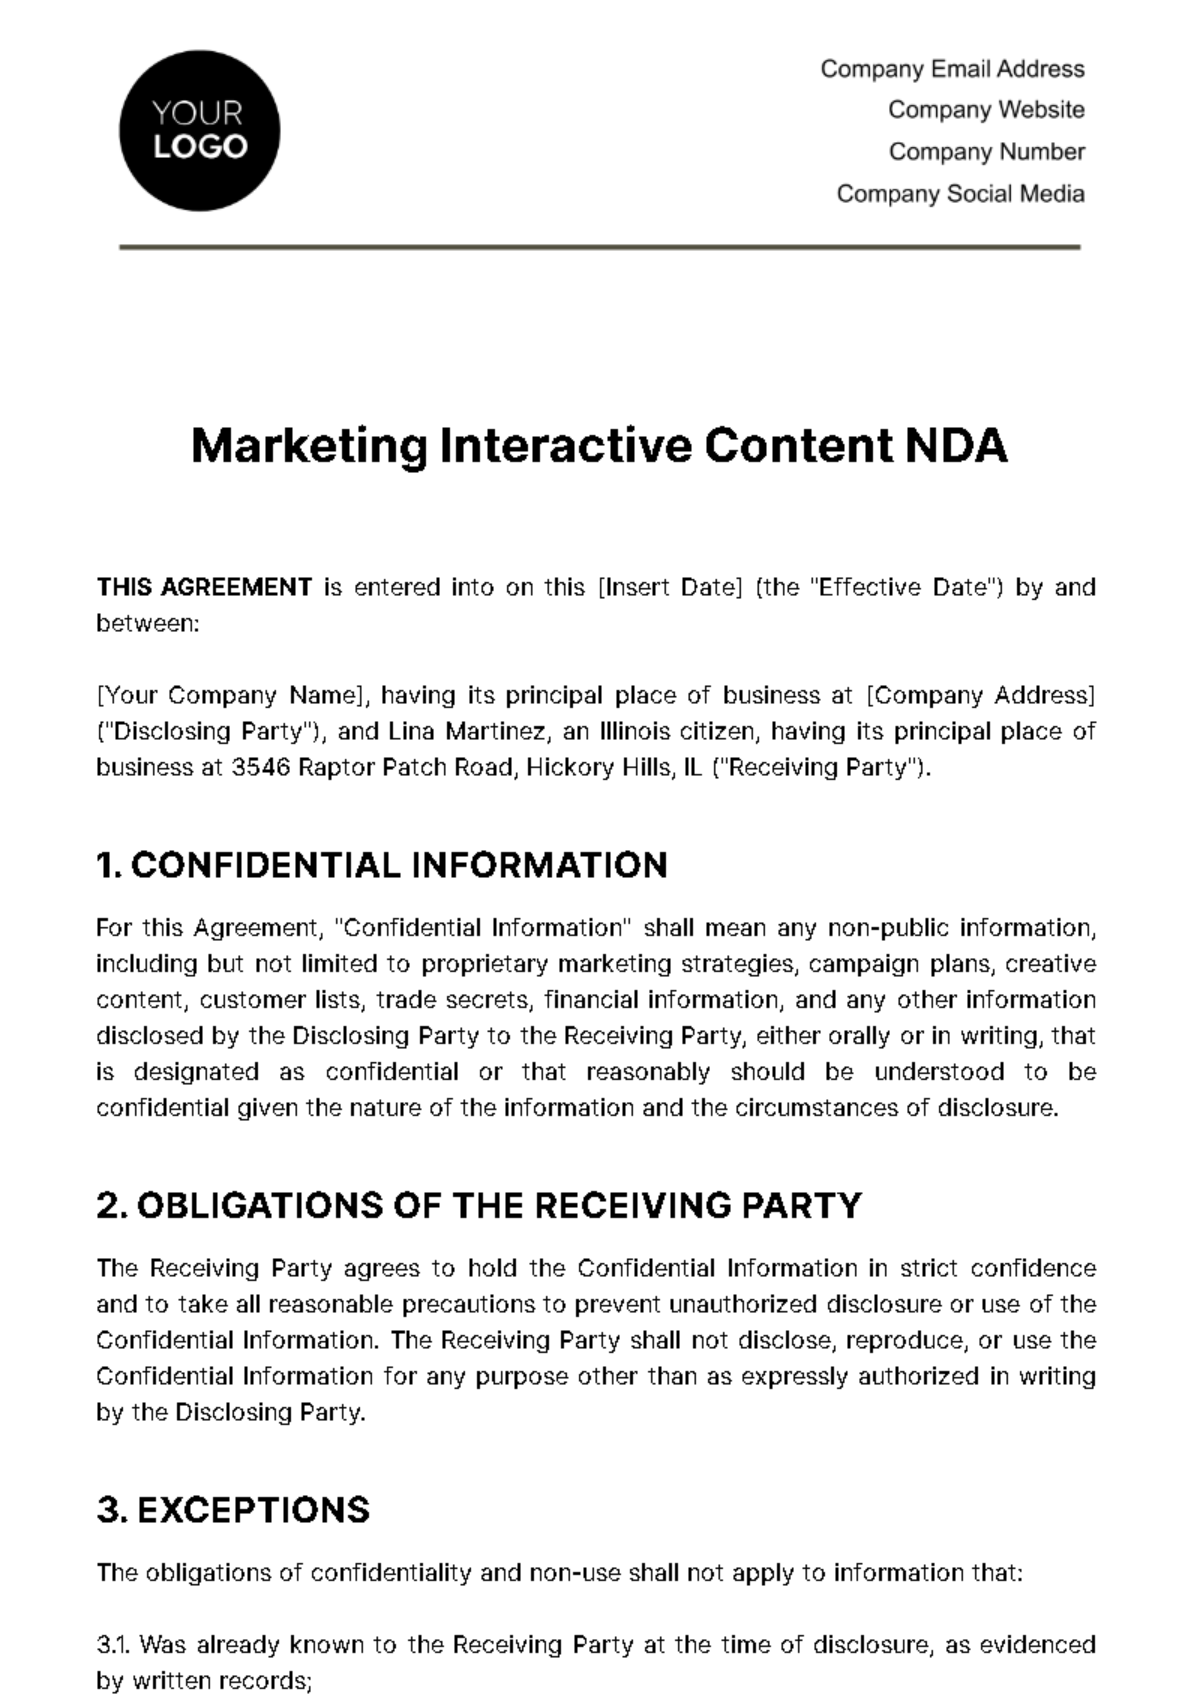 Free Marketing Interactive Content NDA Template